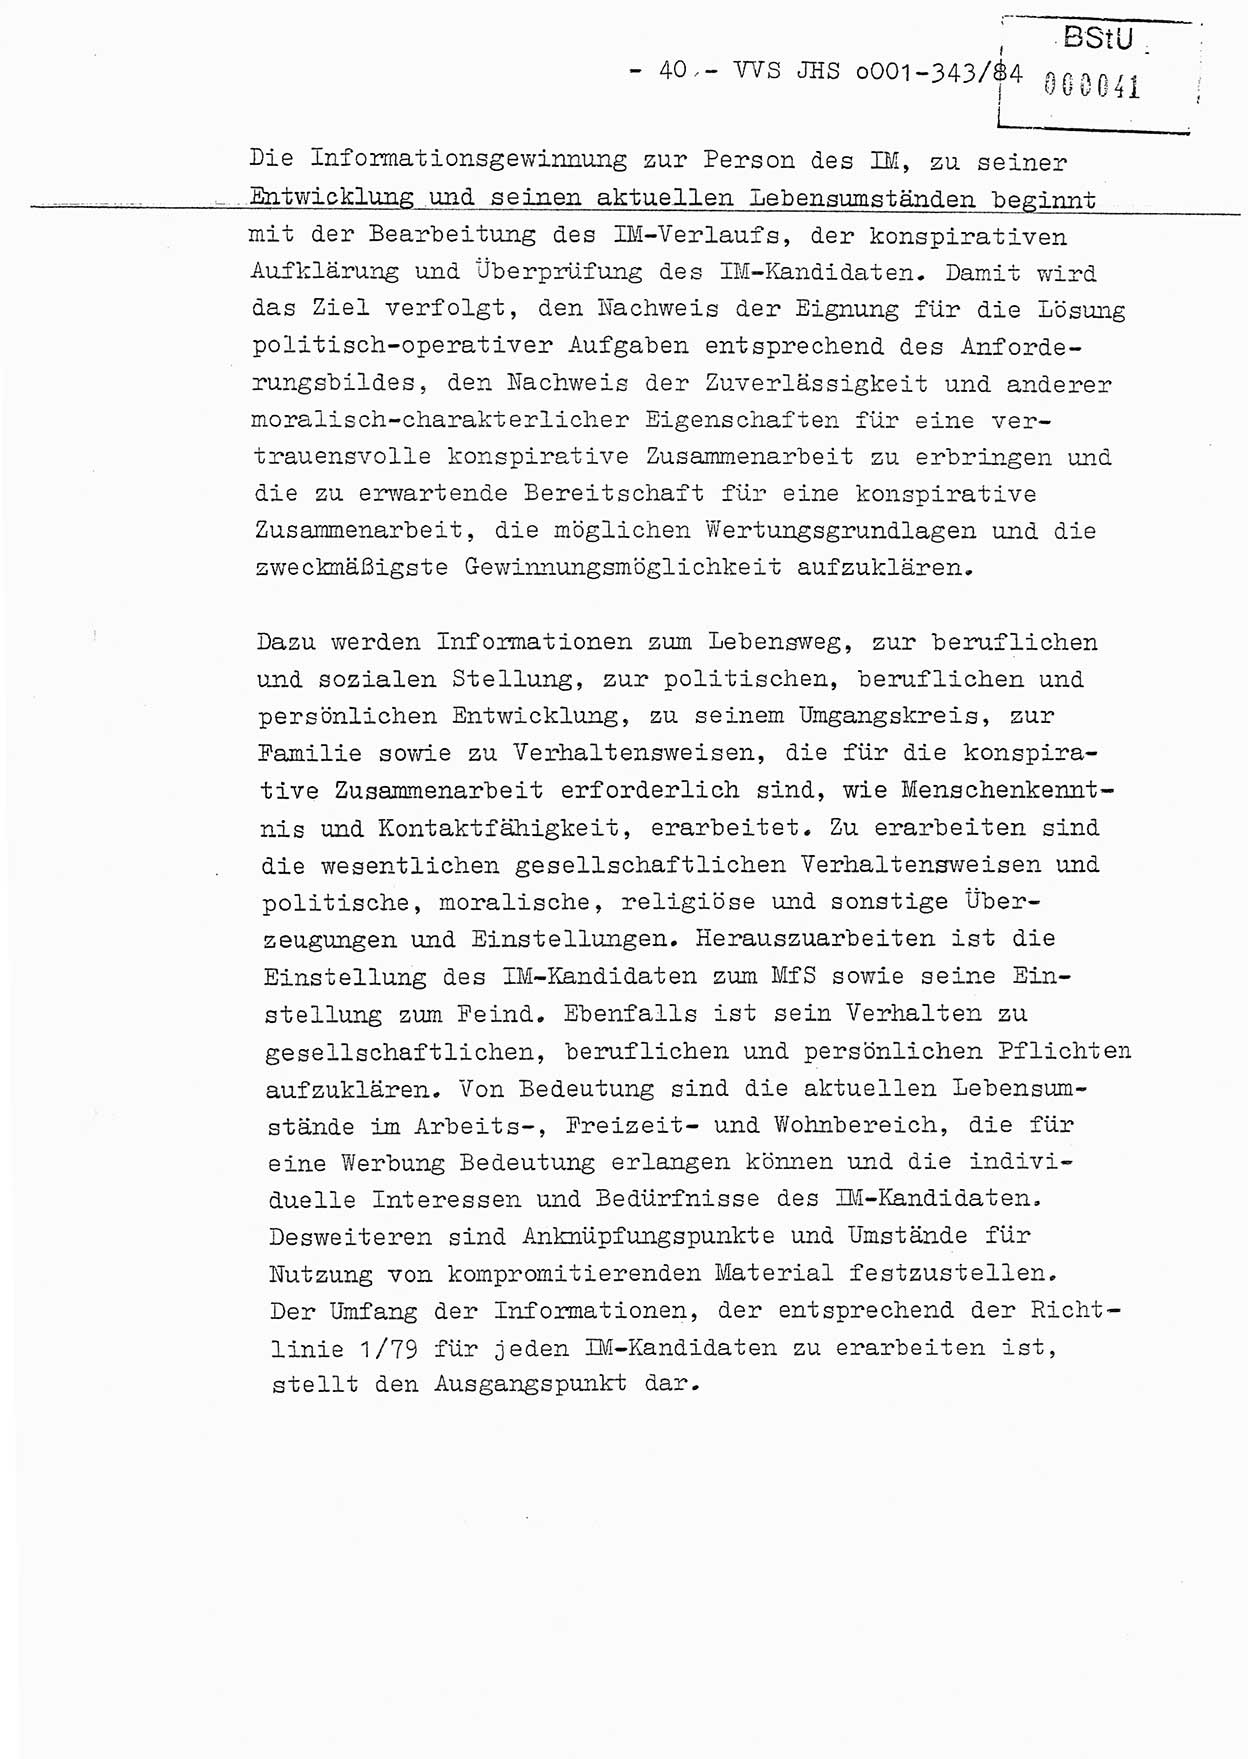 Diplomarbeit, Oberleutnant Bernd Michael (HA Ⅸ/5), Oberleutnant Peter Felber (HA IX/5), Ministerium für Staatssicherheit (MfS) [Deutsche Demokratische Republik (DDR)], Juristische Hochschule (JHS), Vertrauliche Verschlußsache (VVS) o001-343/84, Potsdam 1985, Seite 40 (Dipl.-Arb. MfS DDR JHS VVS o001-343/84 1985, S. 40)